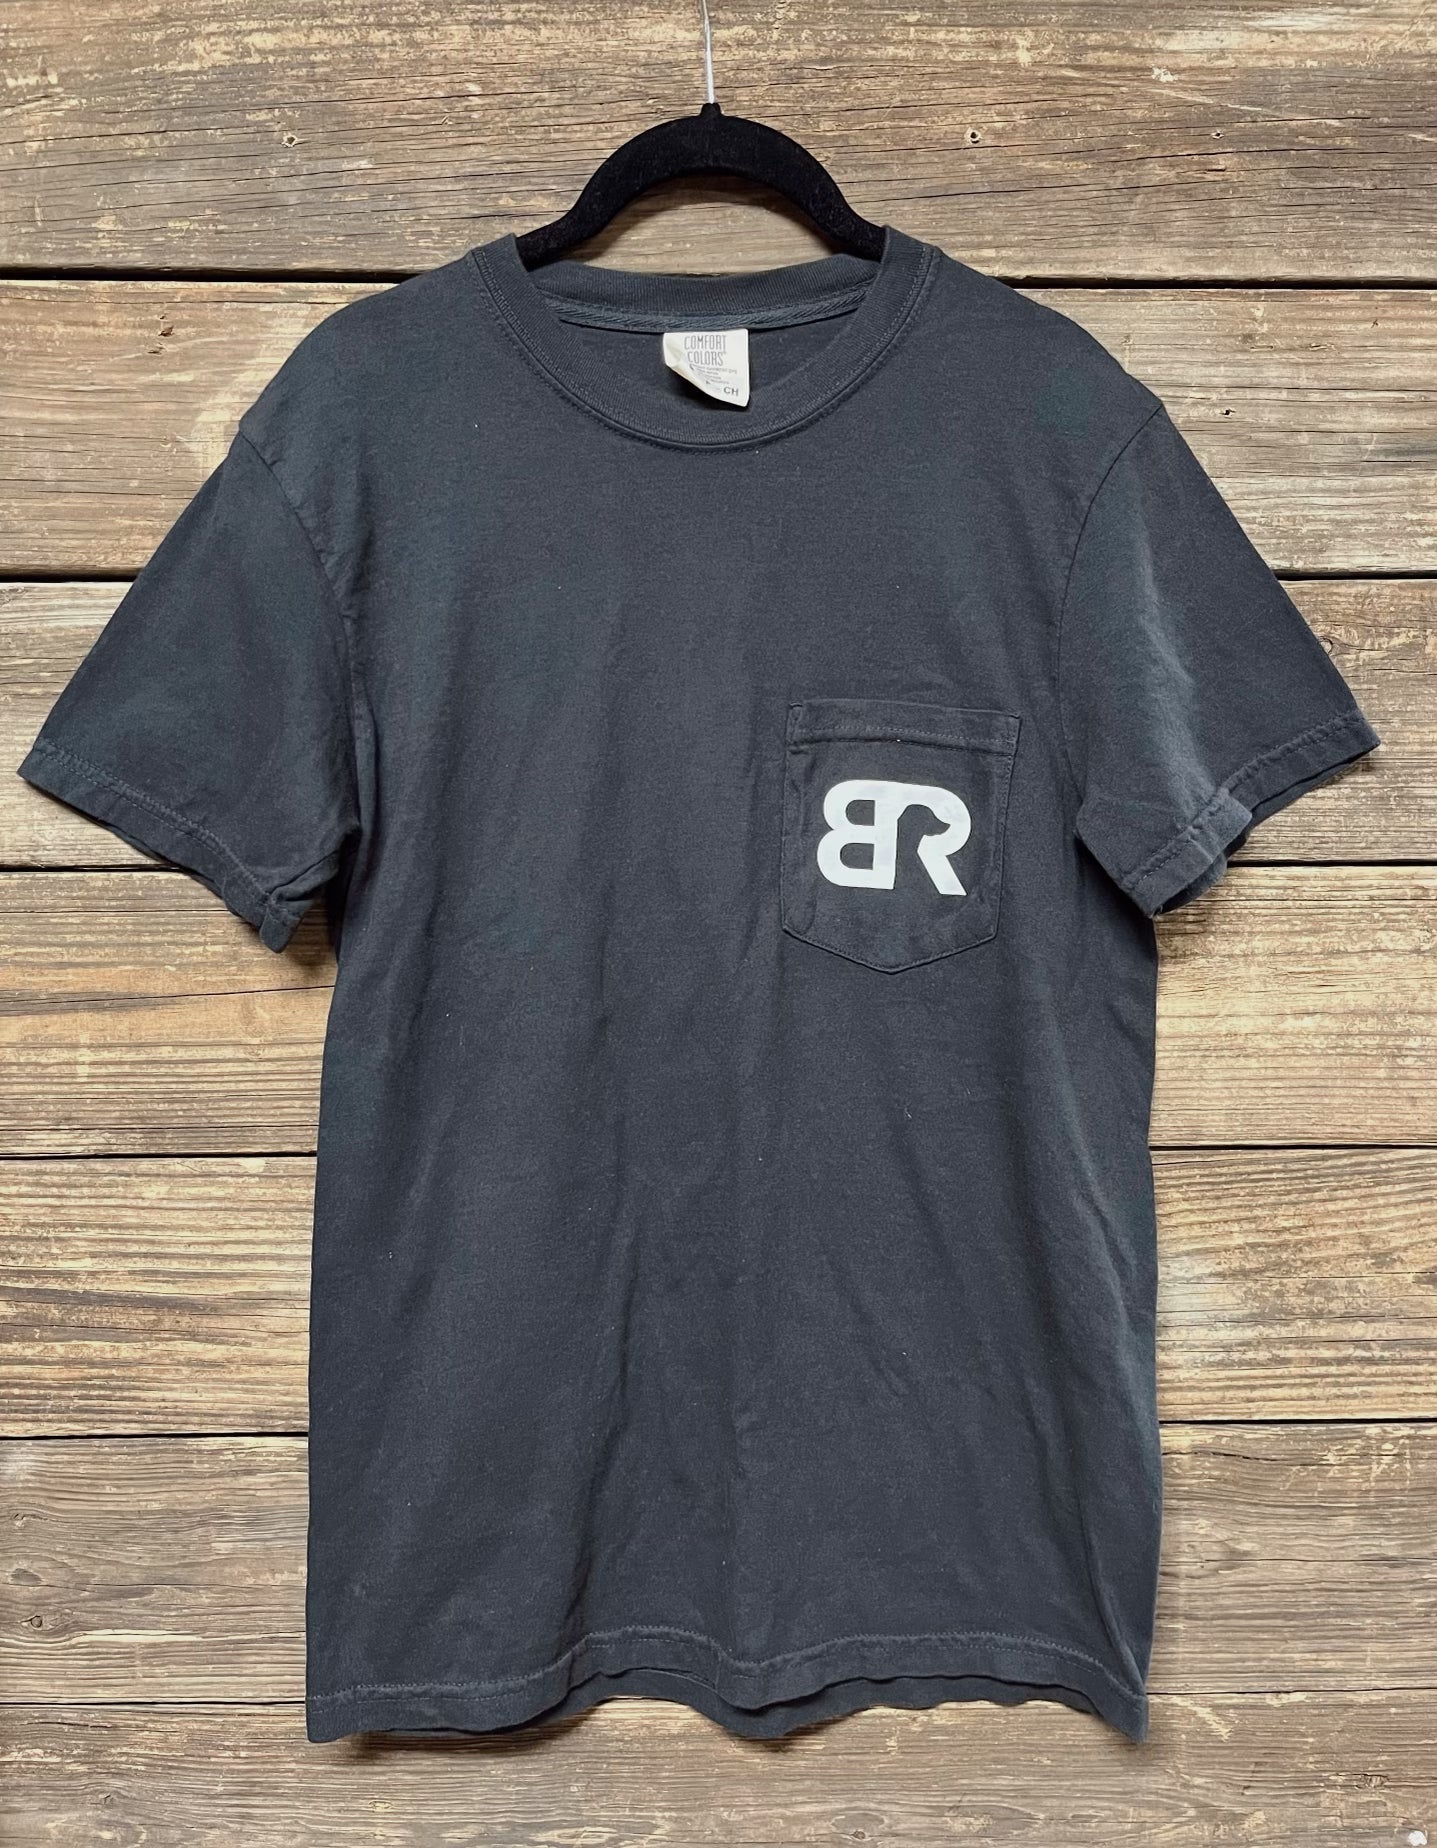 BR Pocket T-shirt